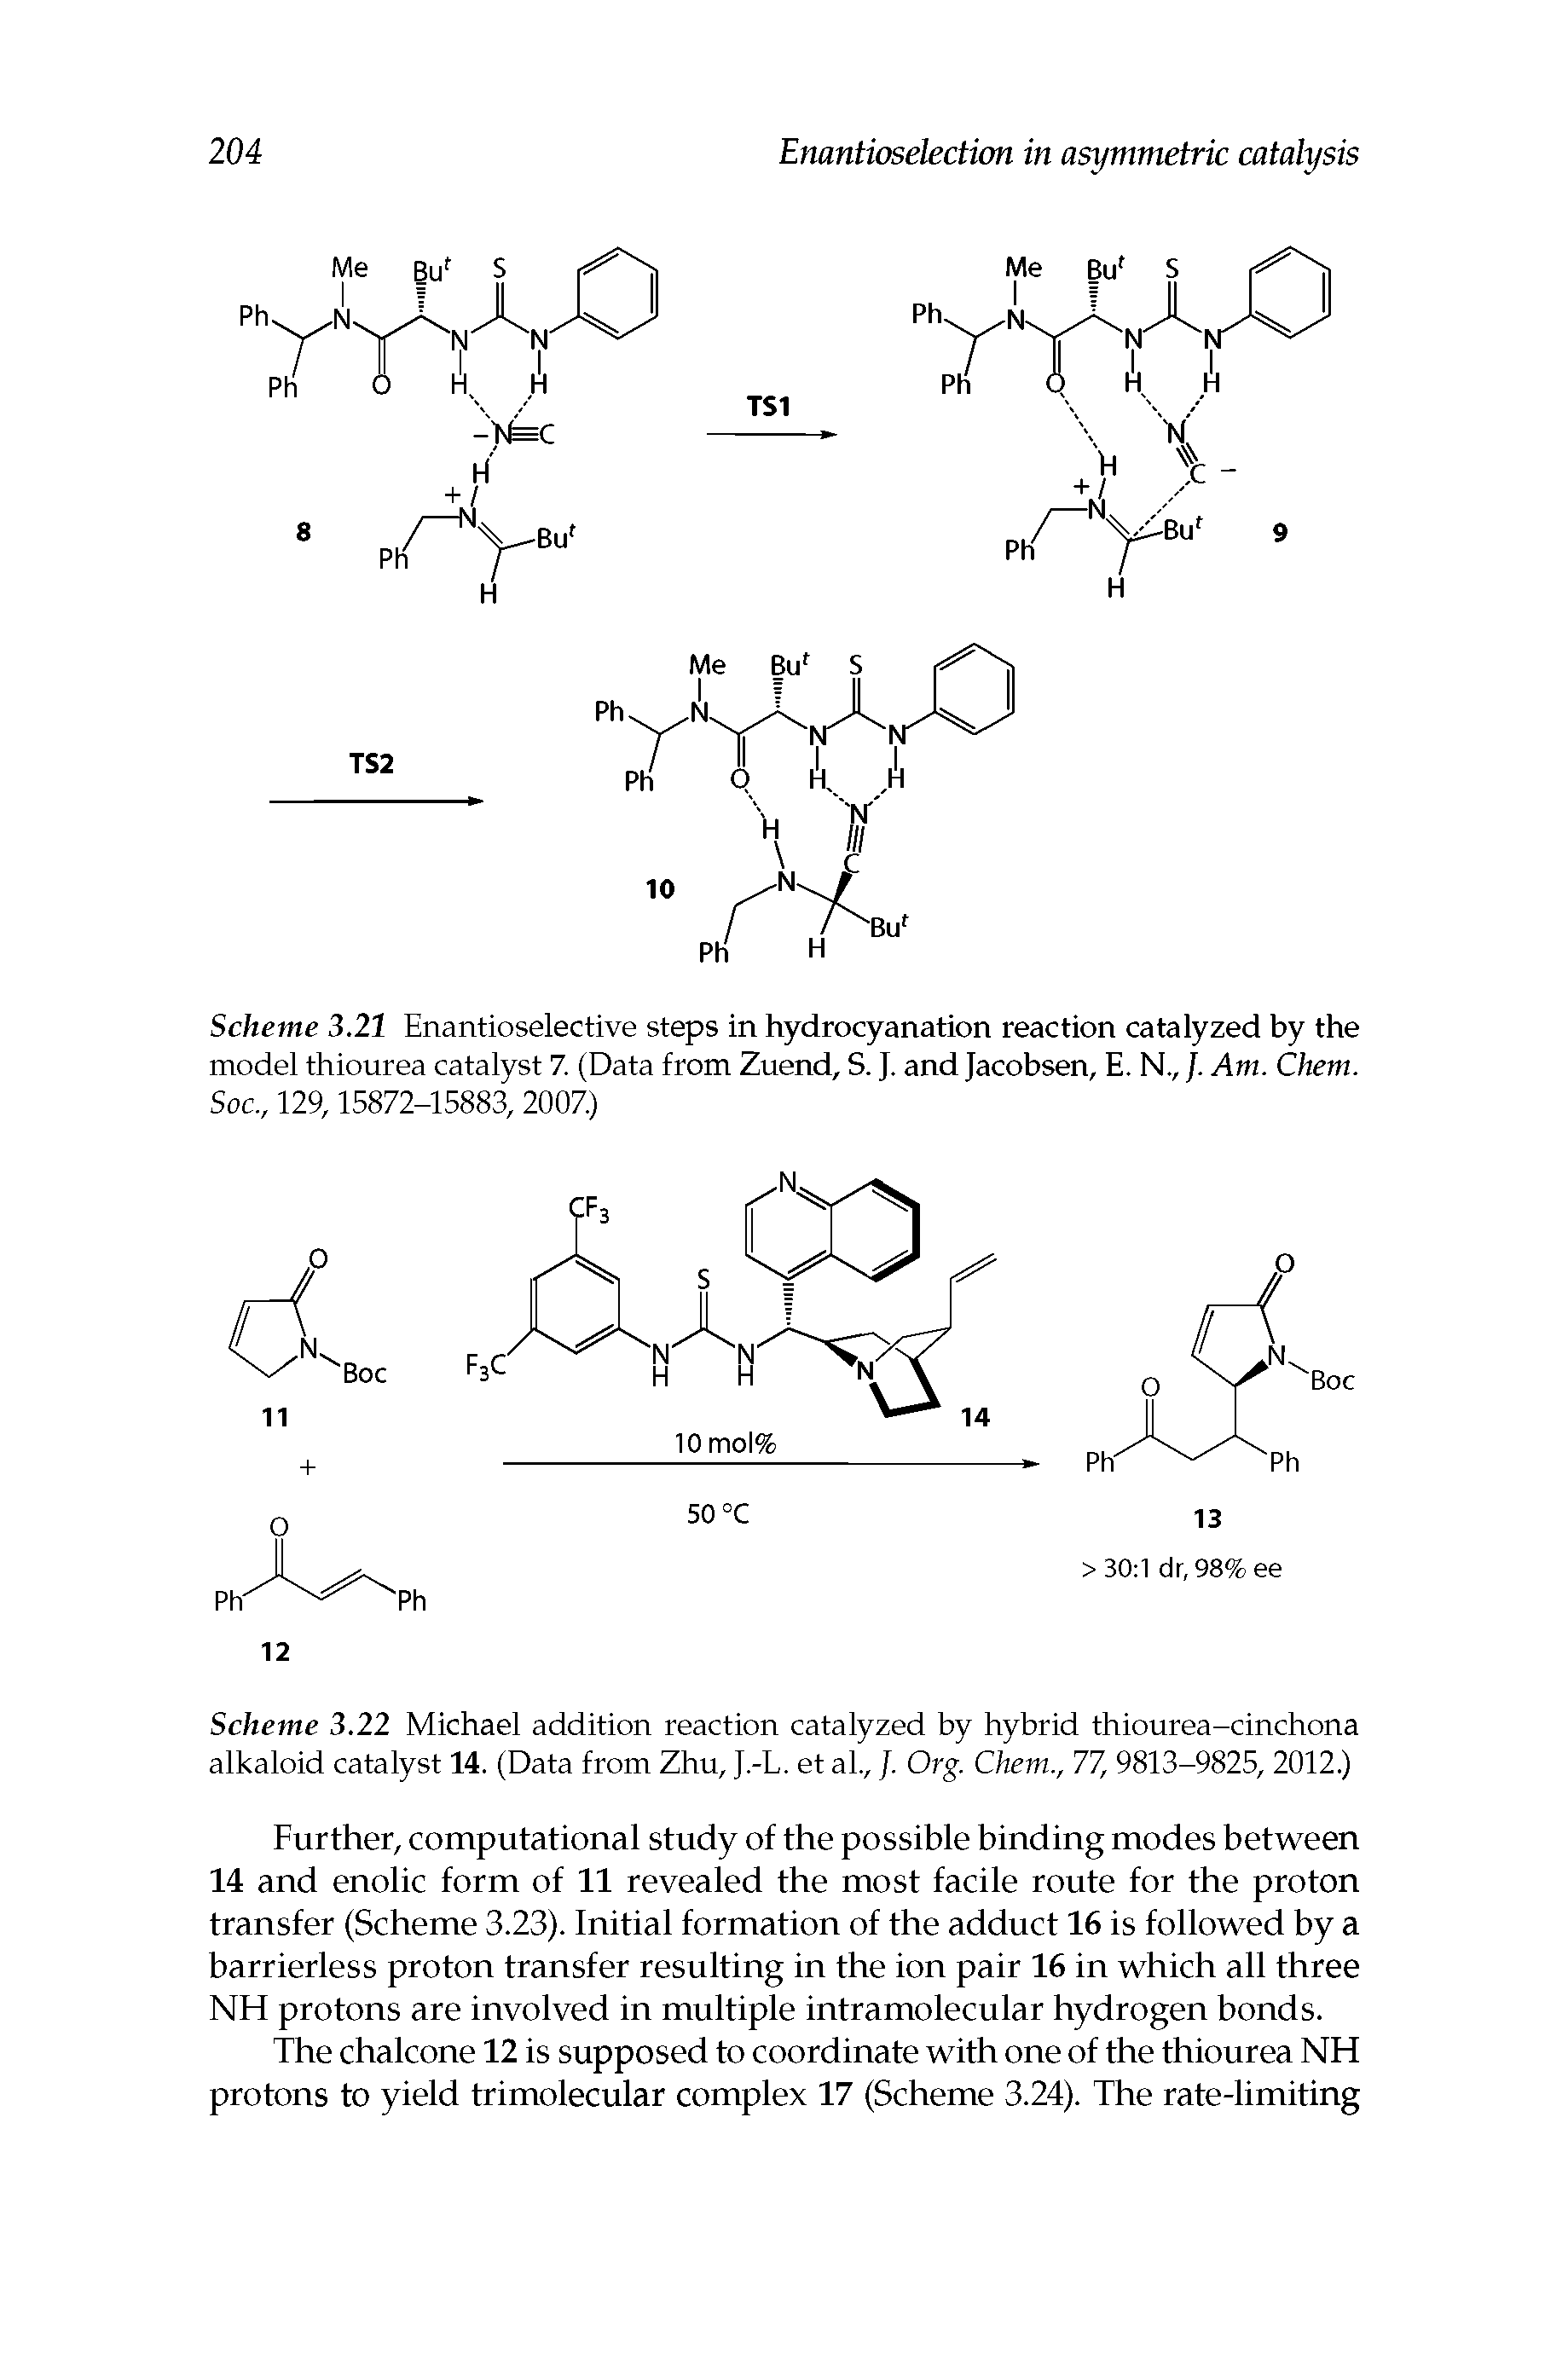 Scheme 3.22 Michael addition reaction catalyzed by hybrid thiourea-cinchona alkaloid catalyst 14. (Data from Zhu, J.-L. et al, /. Org. Chem., 77, 9813-9825, 2012.)...